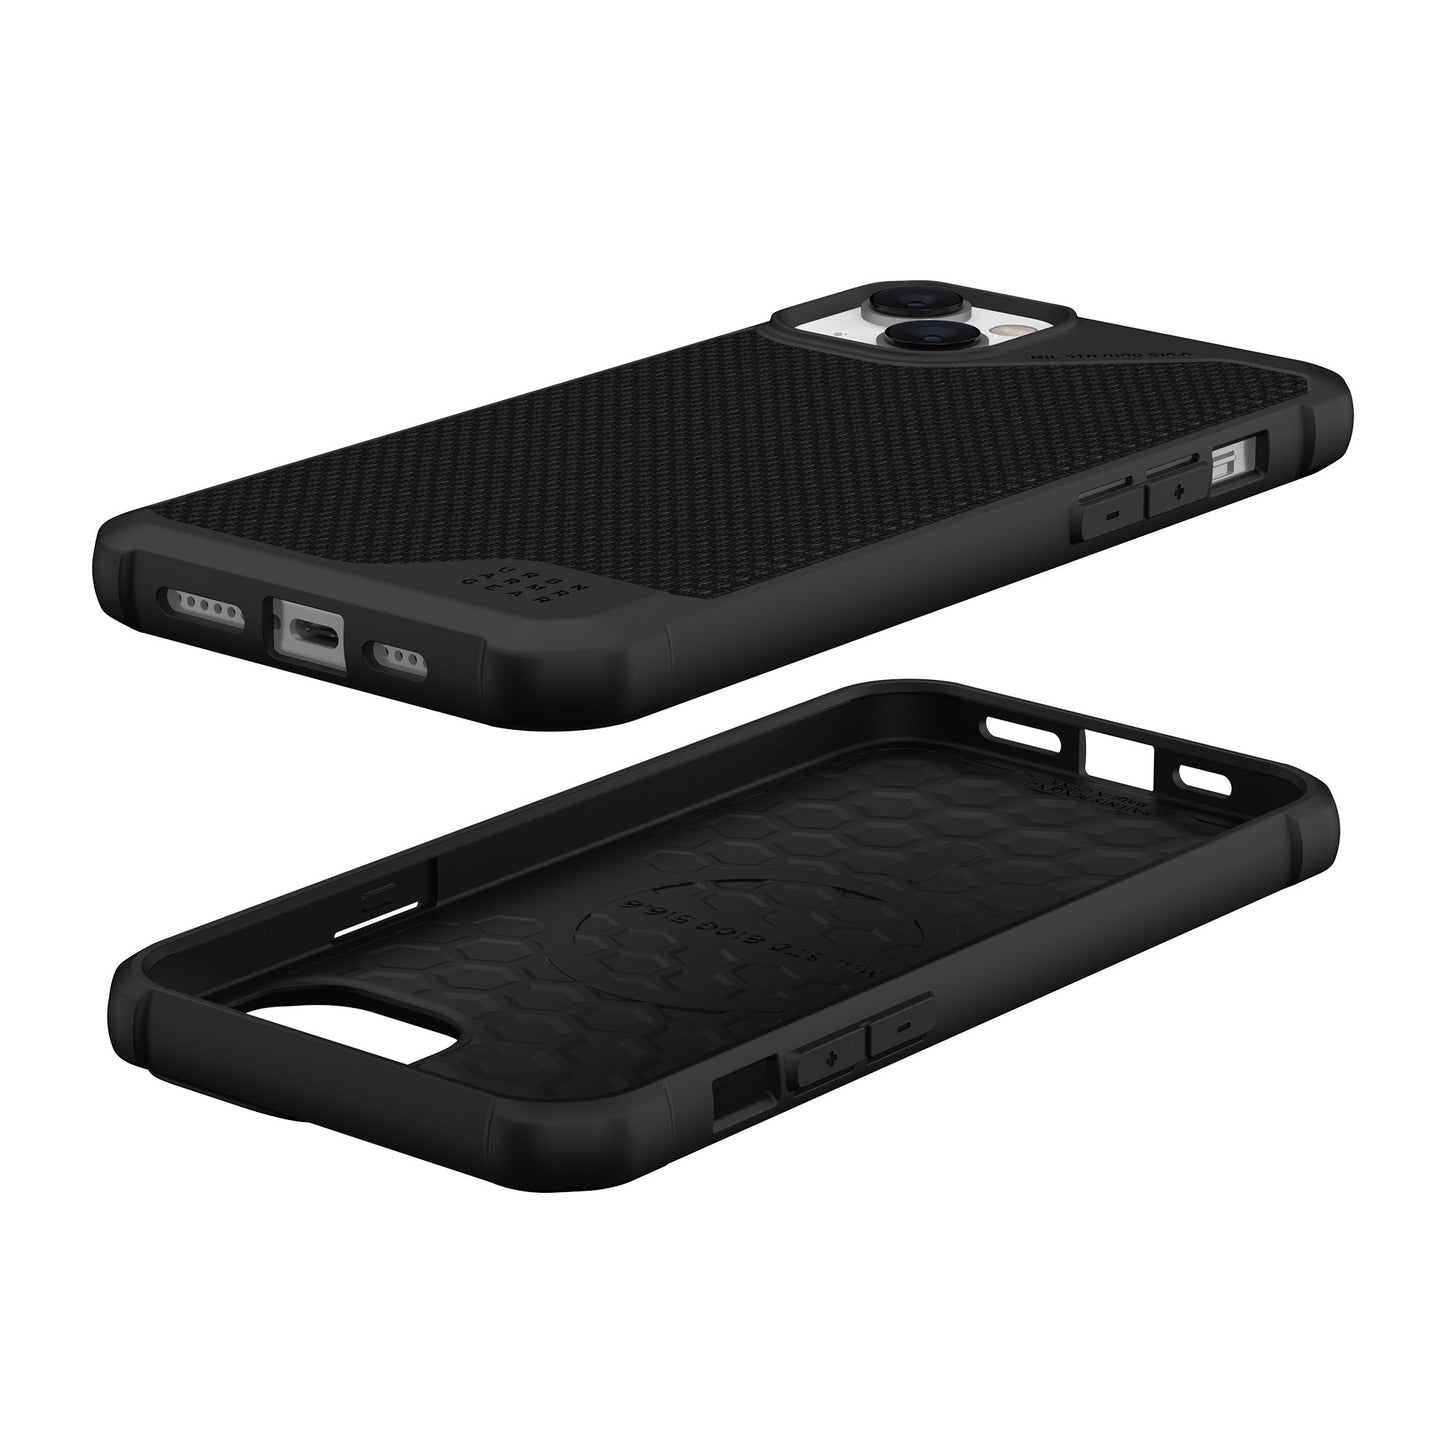 iPhone 14 Plus UAG Metropolis LT MagSafe Case - Kevlar Black - 15-10171